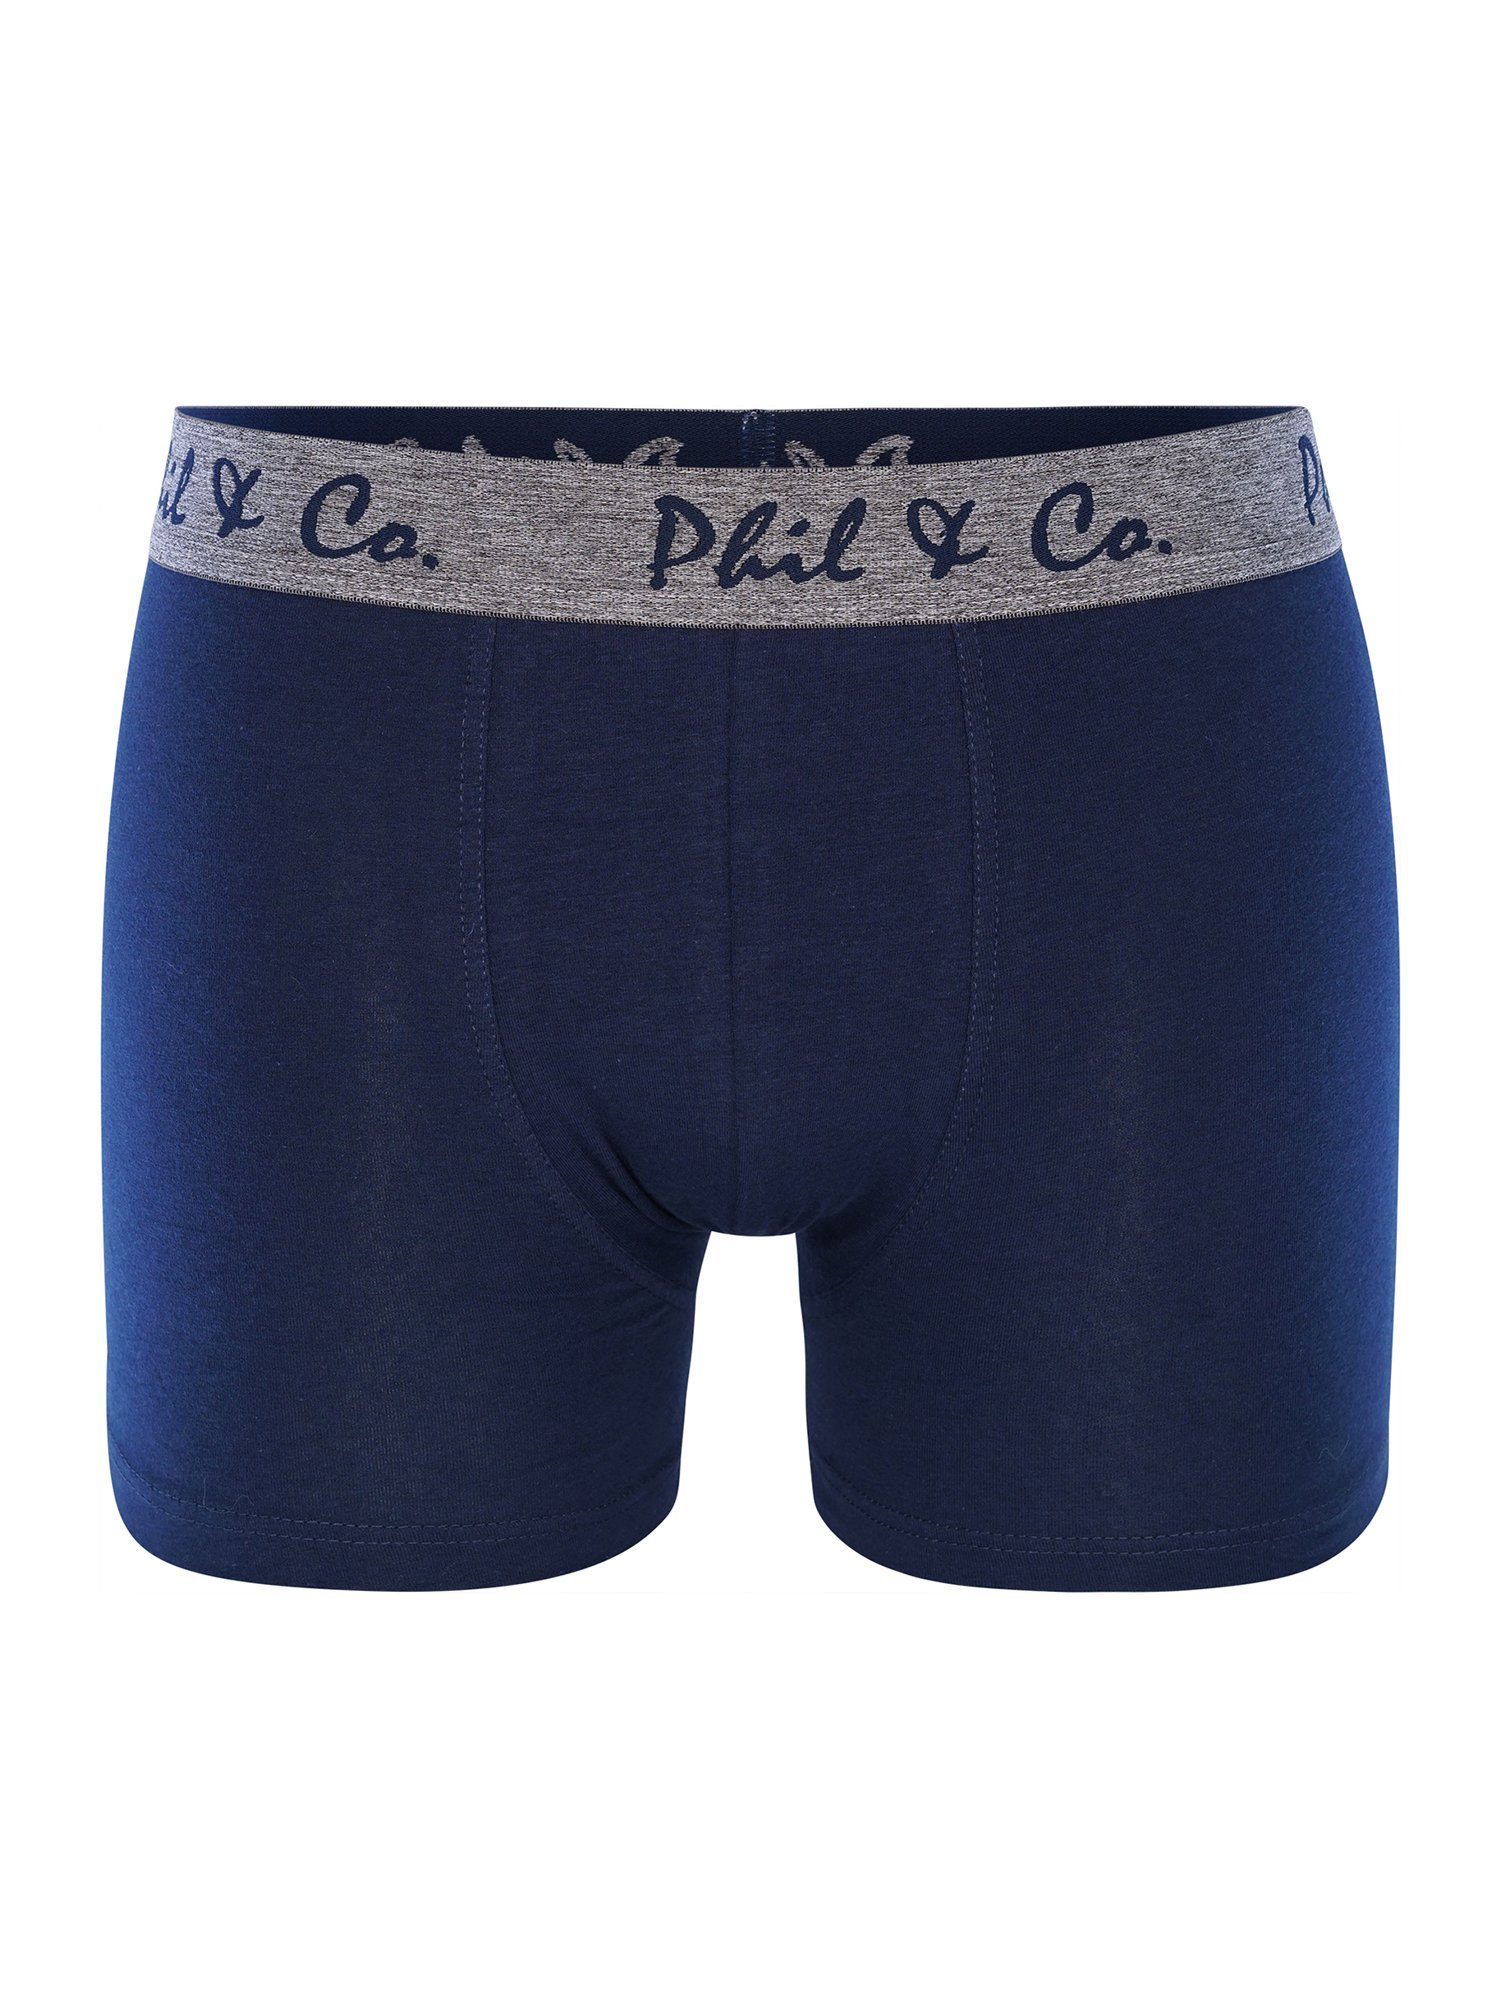 Phil & Co. Retro Jersey navy-grau (6-St) Pants